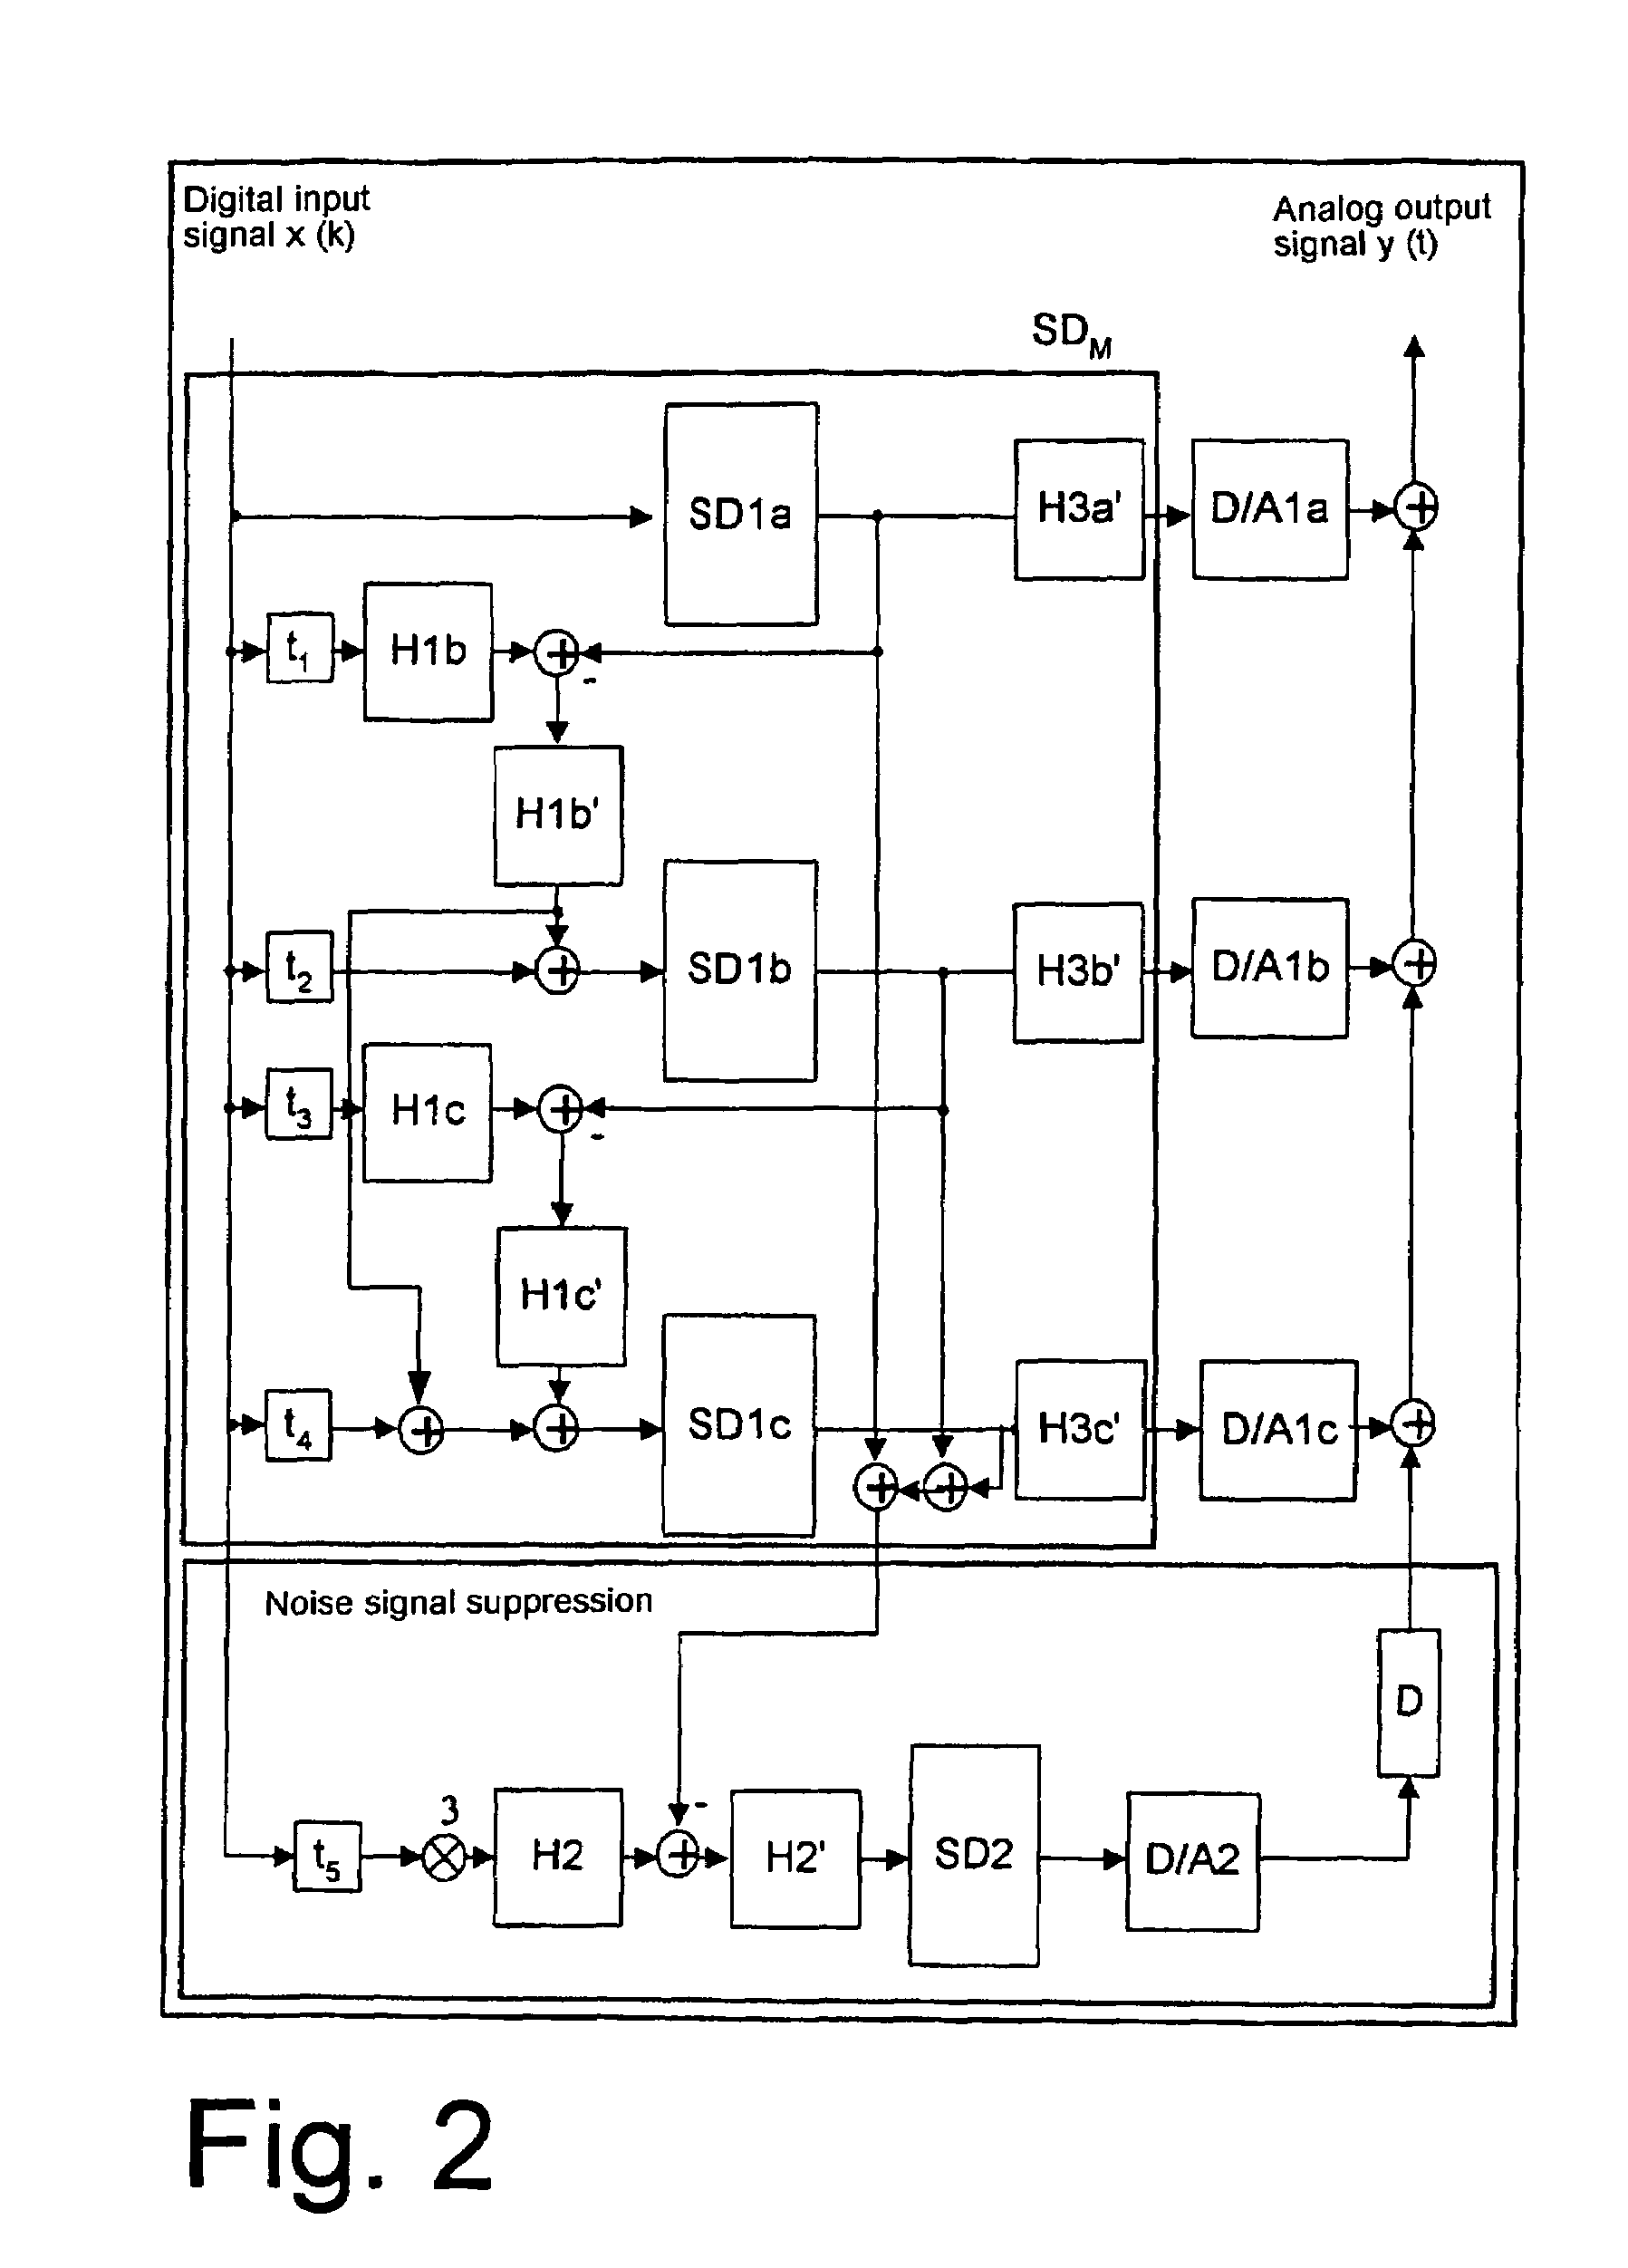 Sigma-delta converter with noise suppression